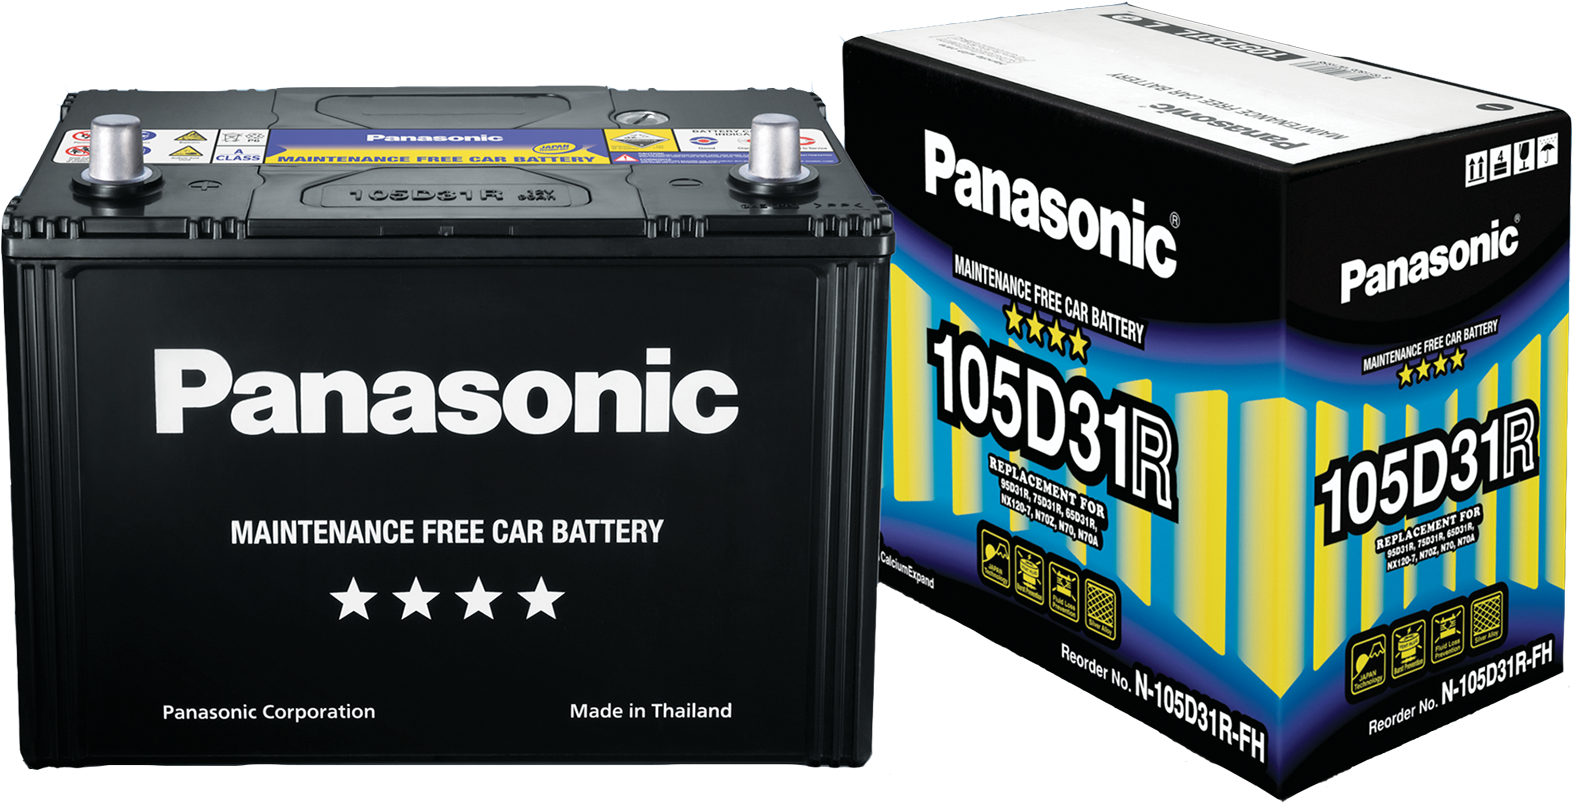 Panasonic batteries. Аккумулятор Maintenance Battery. АКБ автомобильный Panasonic. Гелевый аккумулятор Panasonic 45ah. Панасоник АКБ для автомобиля.